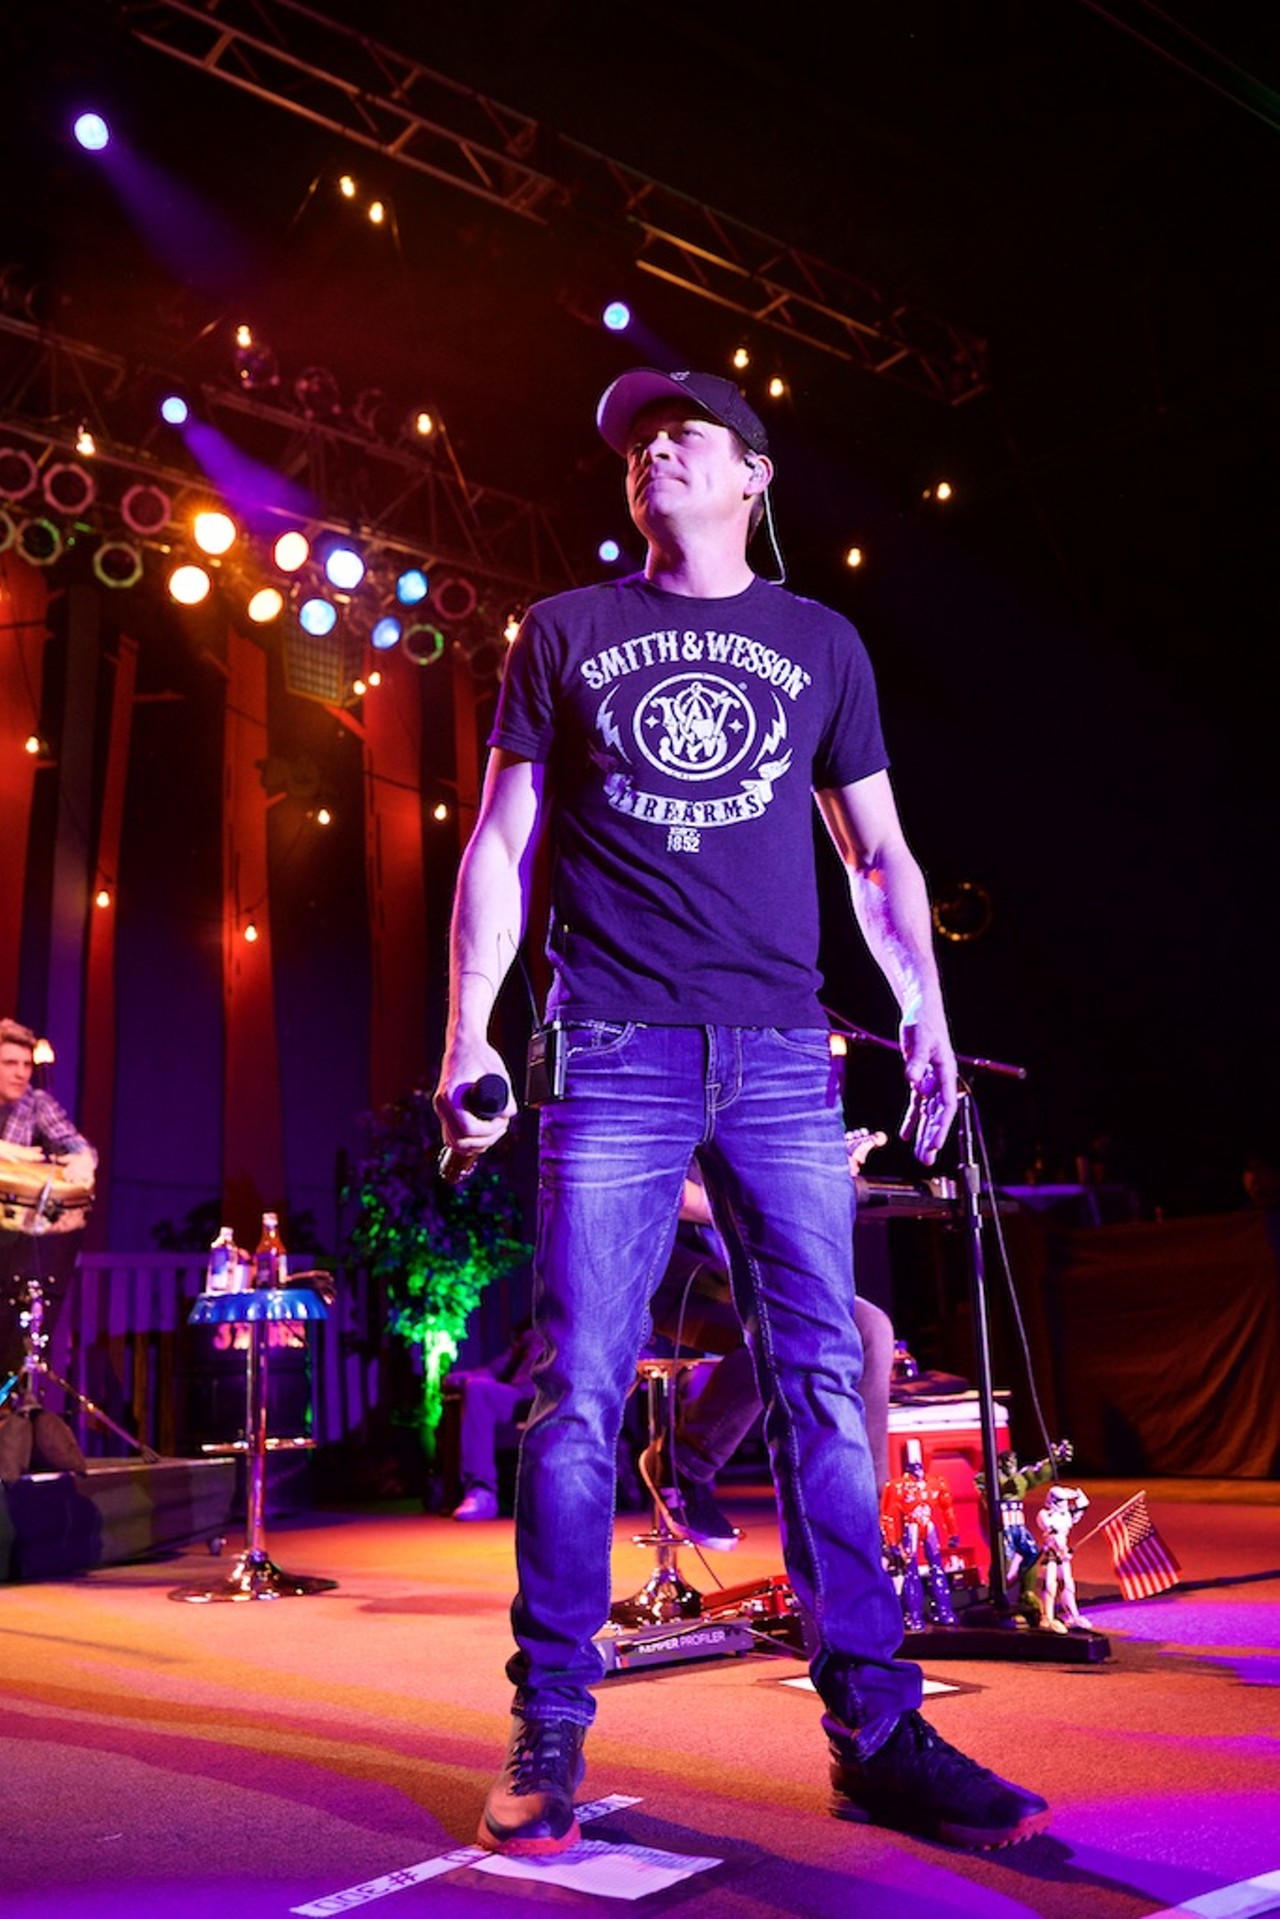 3 Doors Down Performing at Hard Rock Live